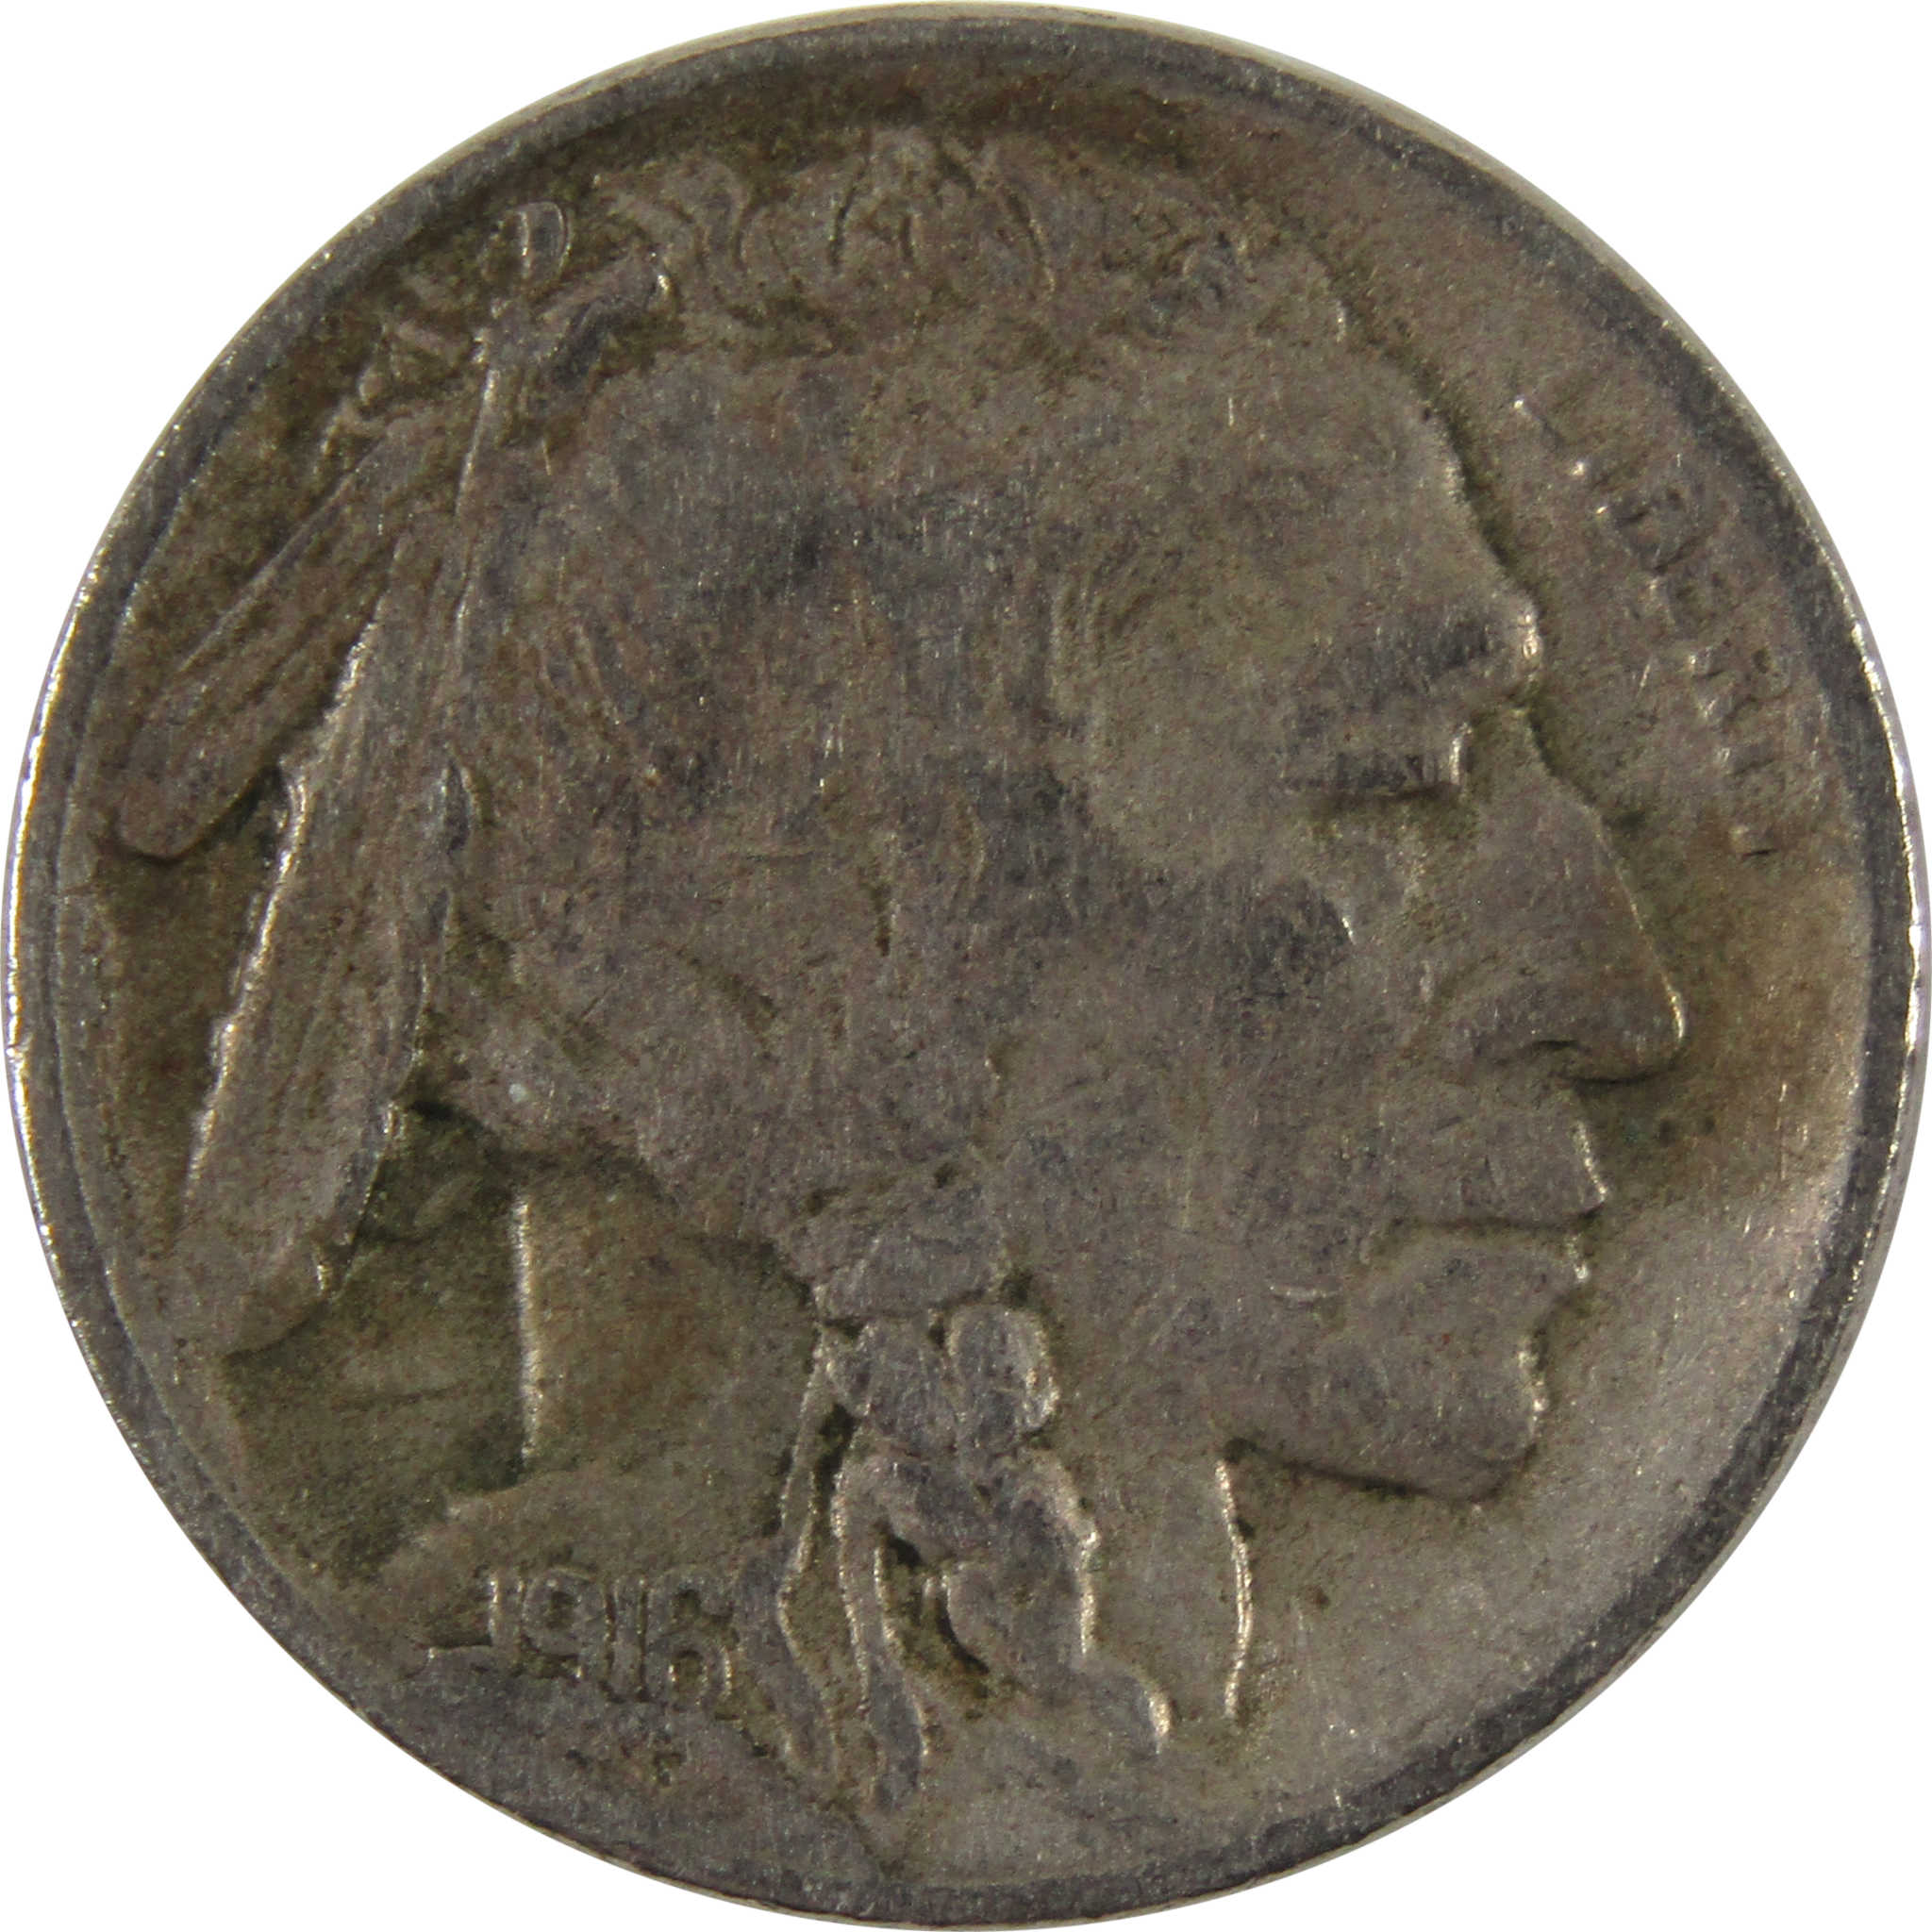 1916 S Indian Head Buffalo VF 5c Coin Die Break on Date SKU:I8873